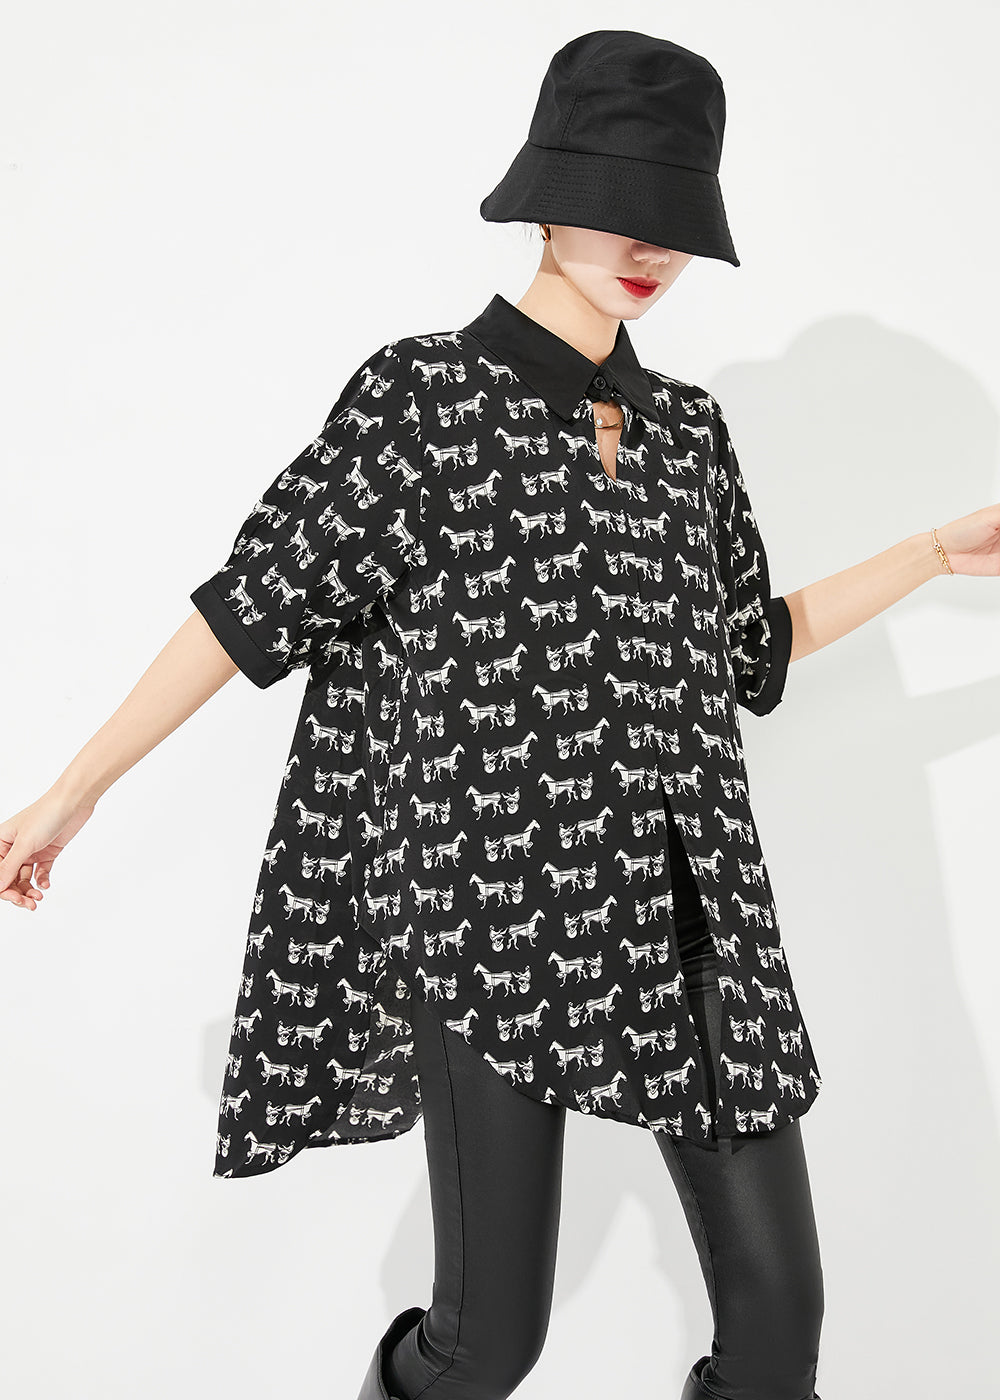 Classy Black Oversized Print Low High Design Chiffon Long Shirt Half Sleeve LY0824 - fabuloryshop